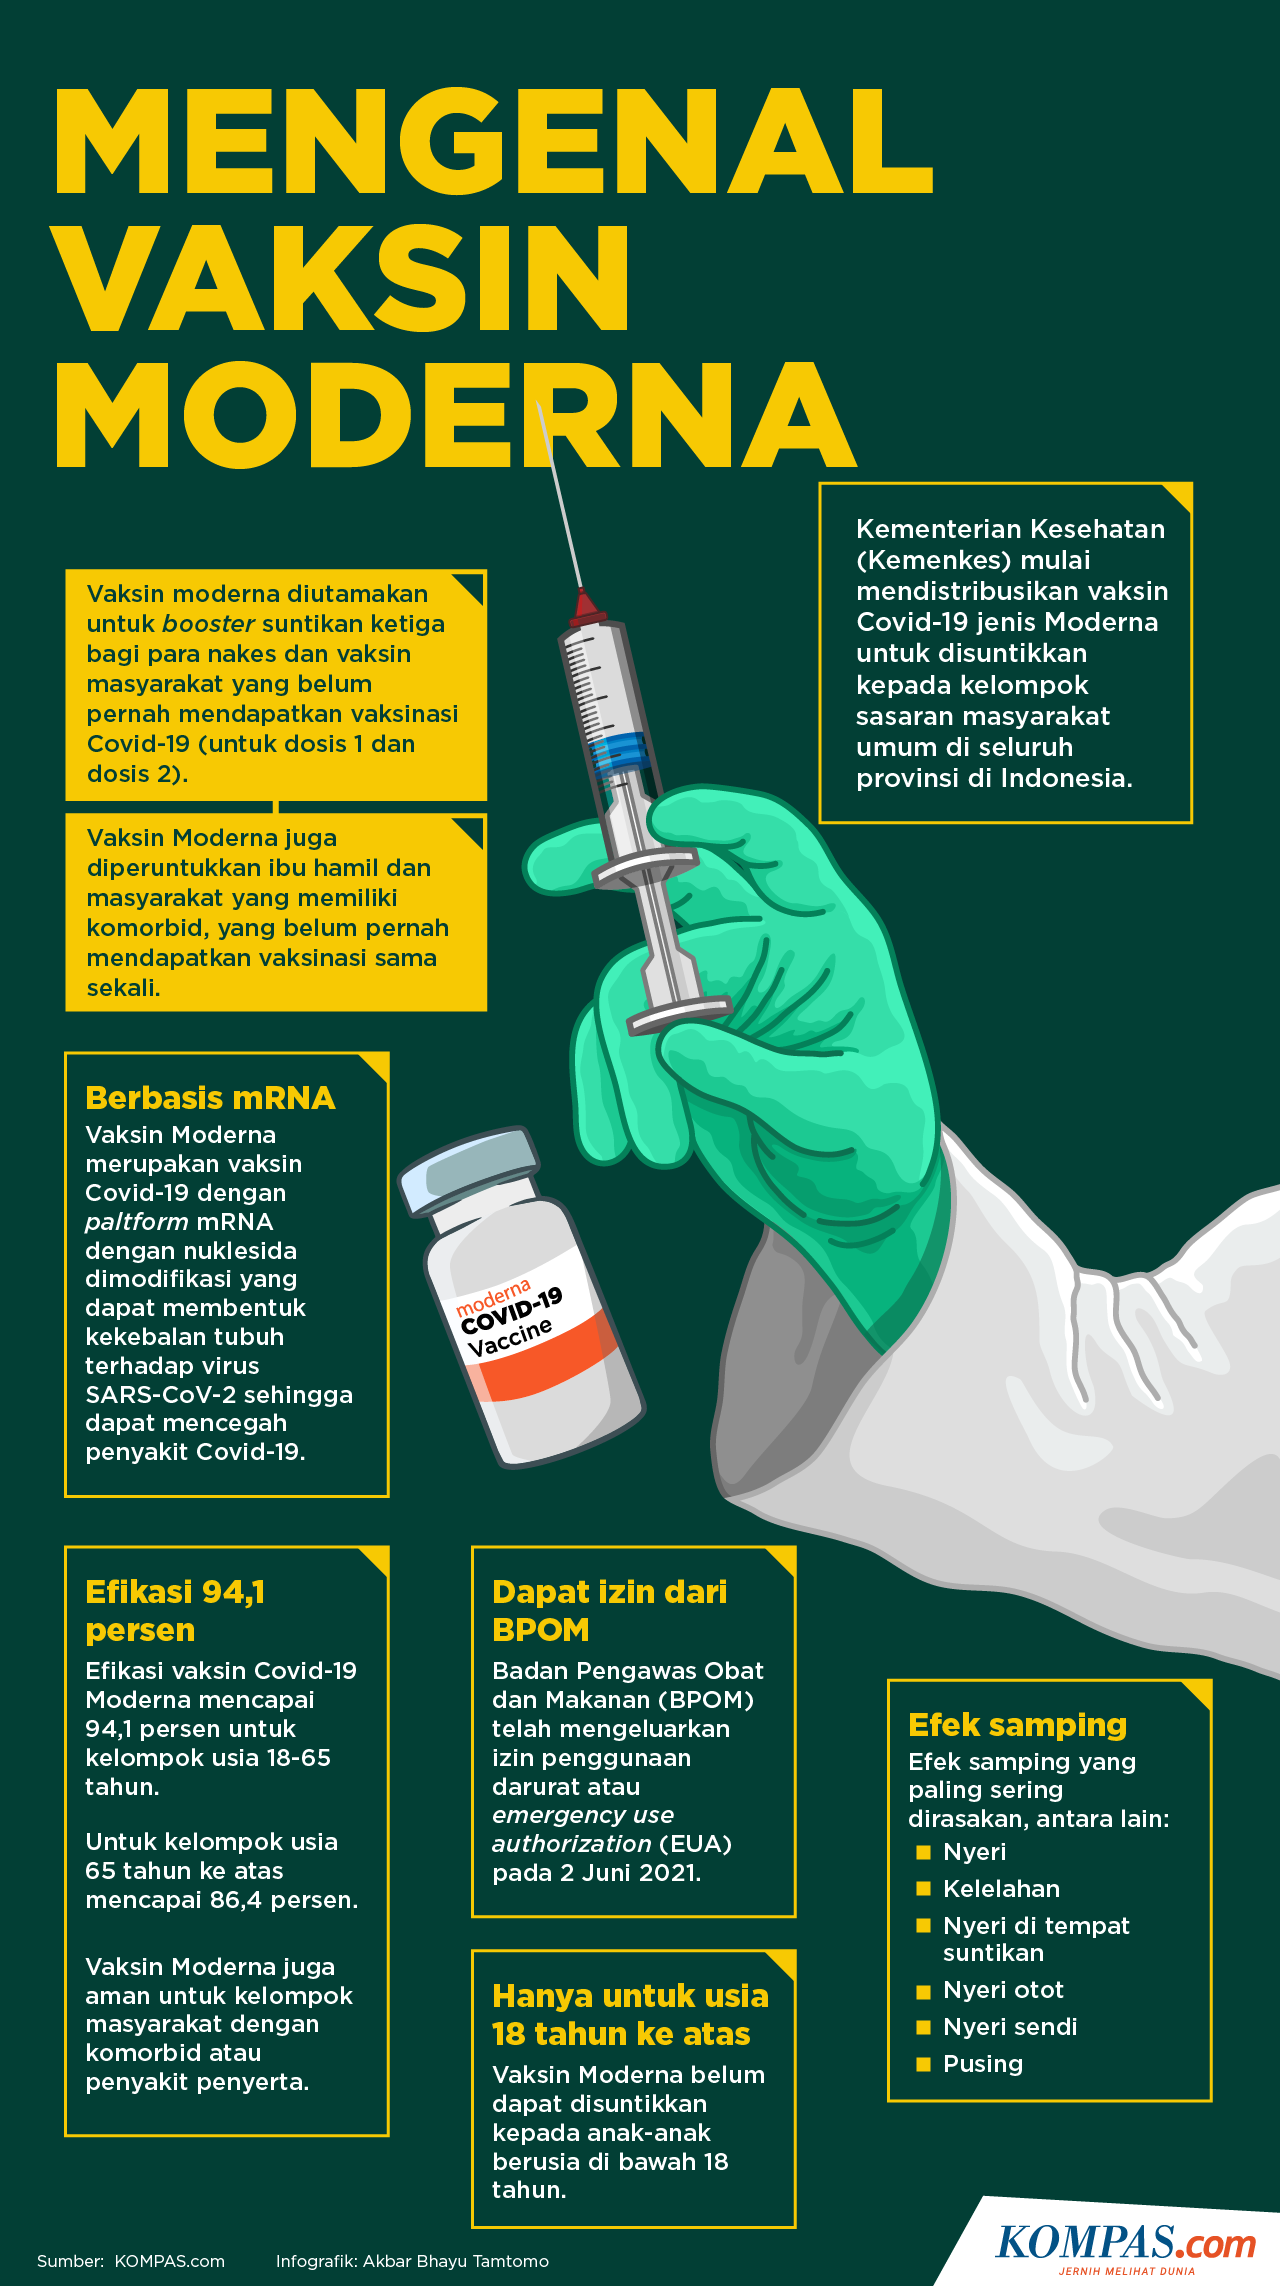 Samping 2 dosis efek pfizer vaksin 3 Kelebihan